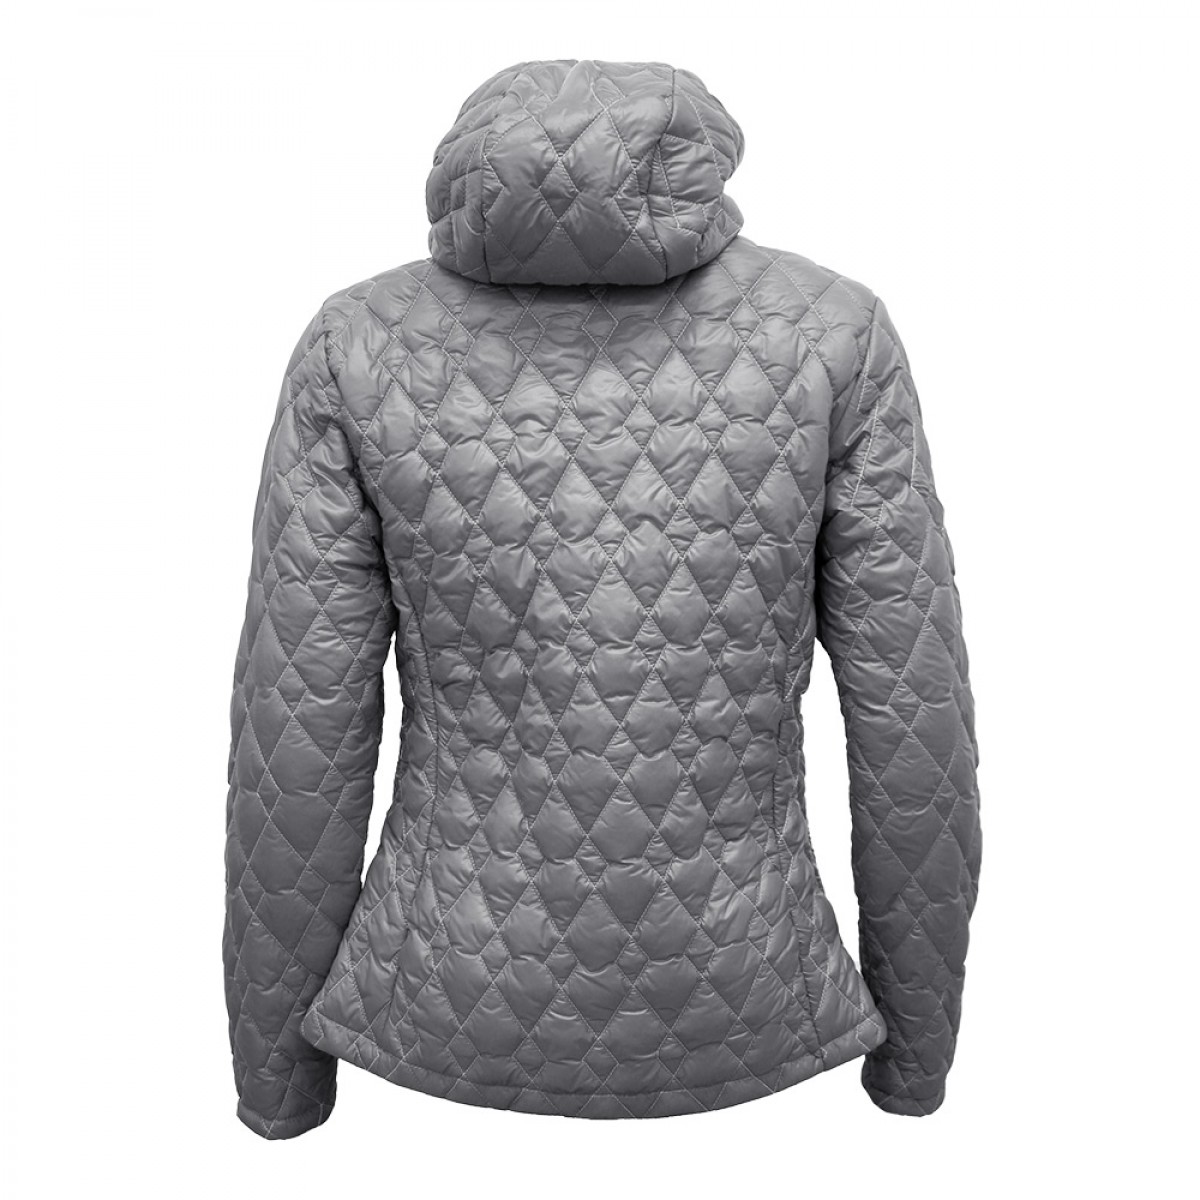 women-polyfiber-jacket-with-hoodie-kpj06913-10a